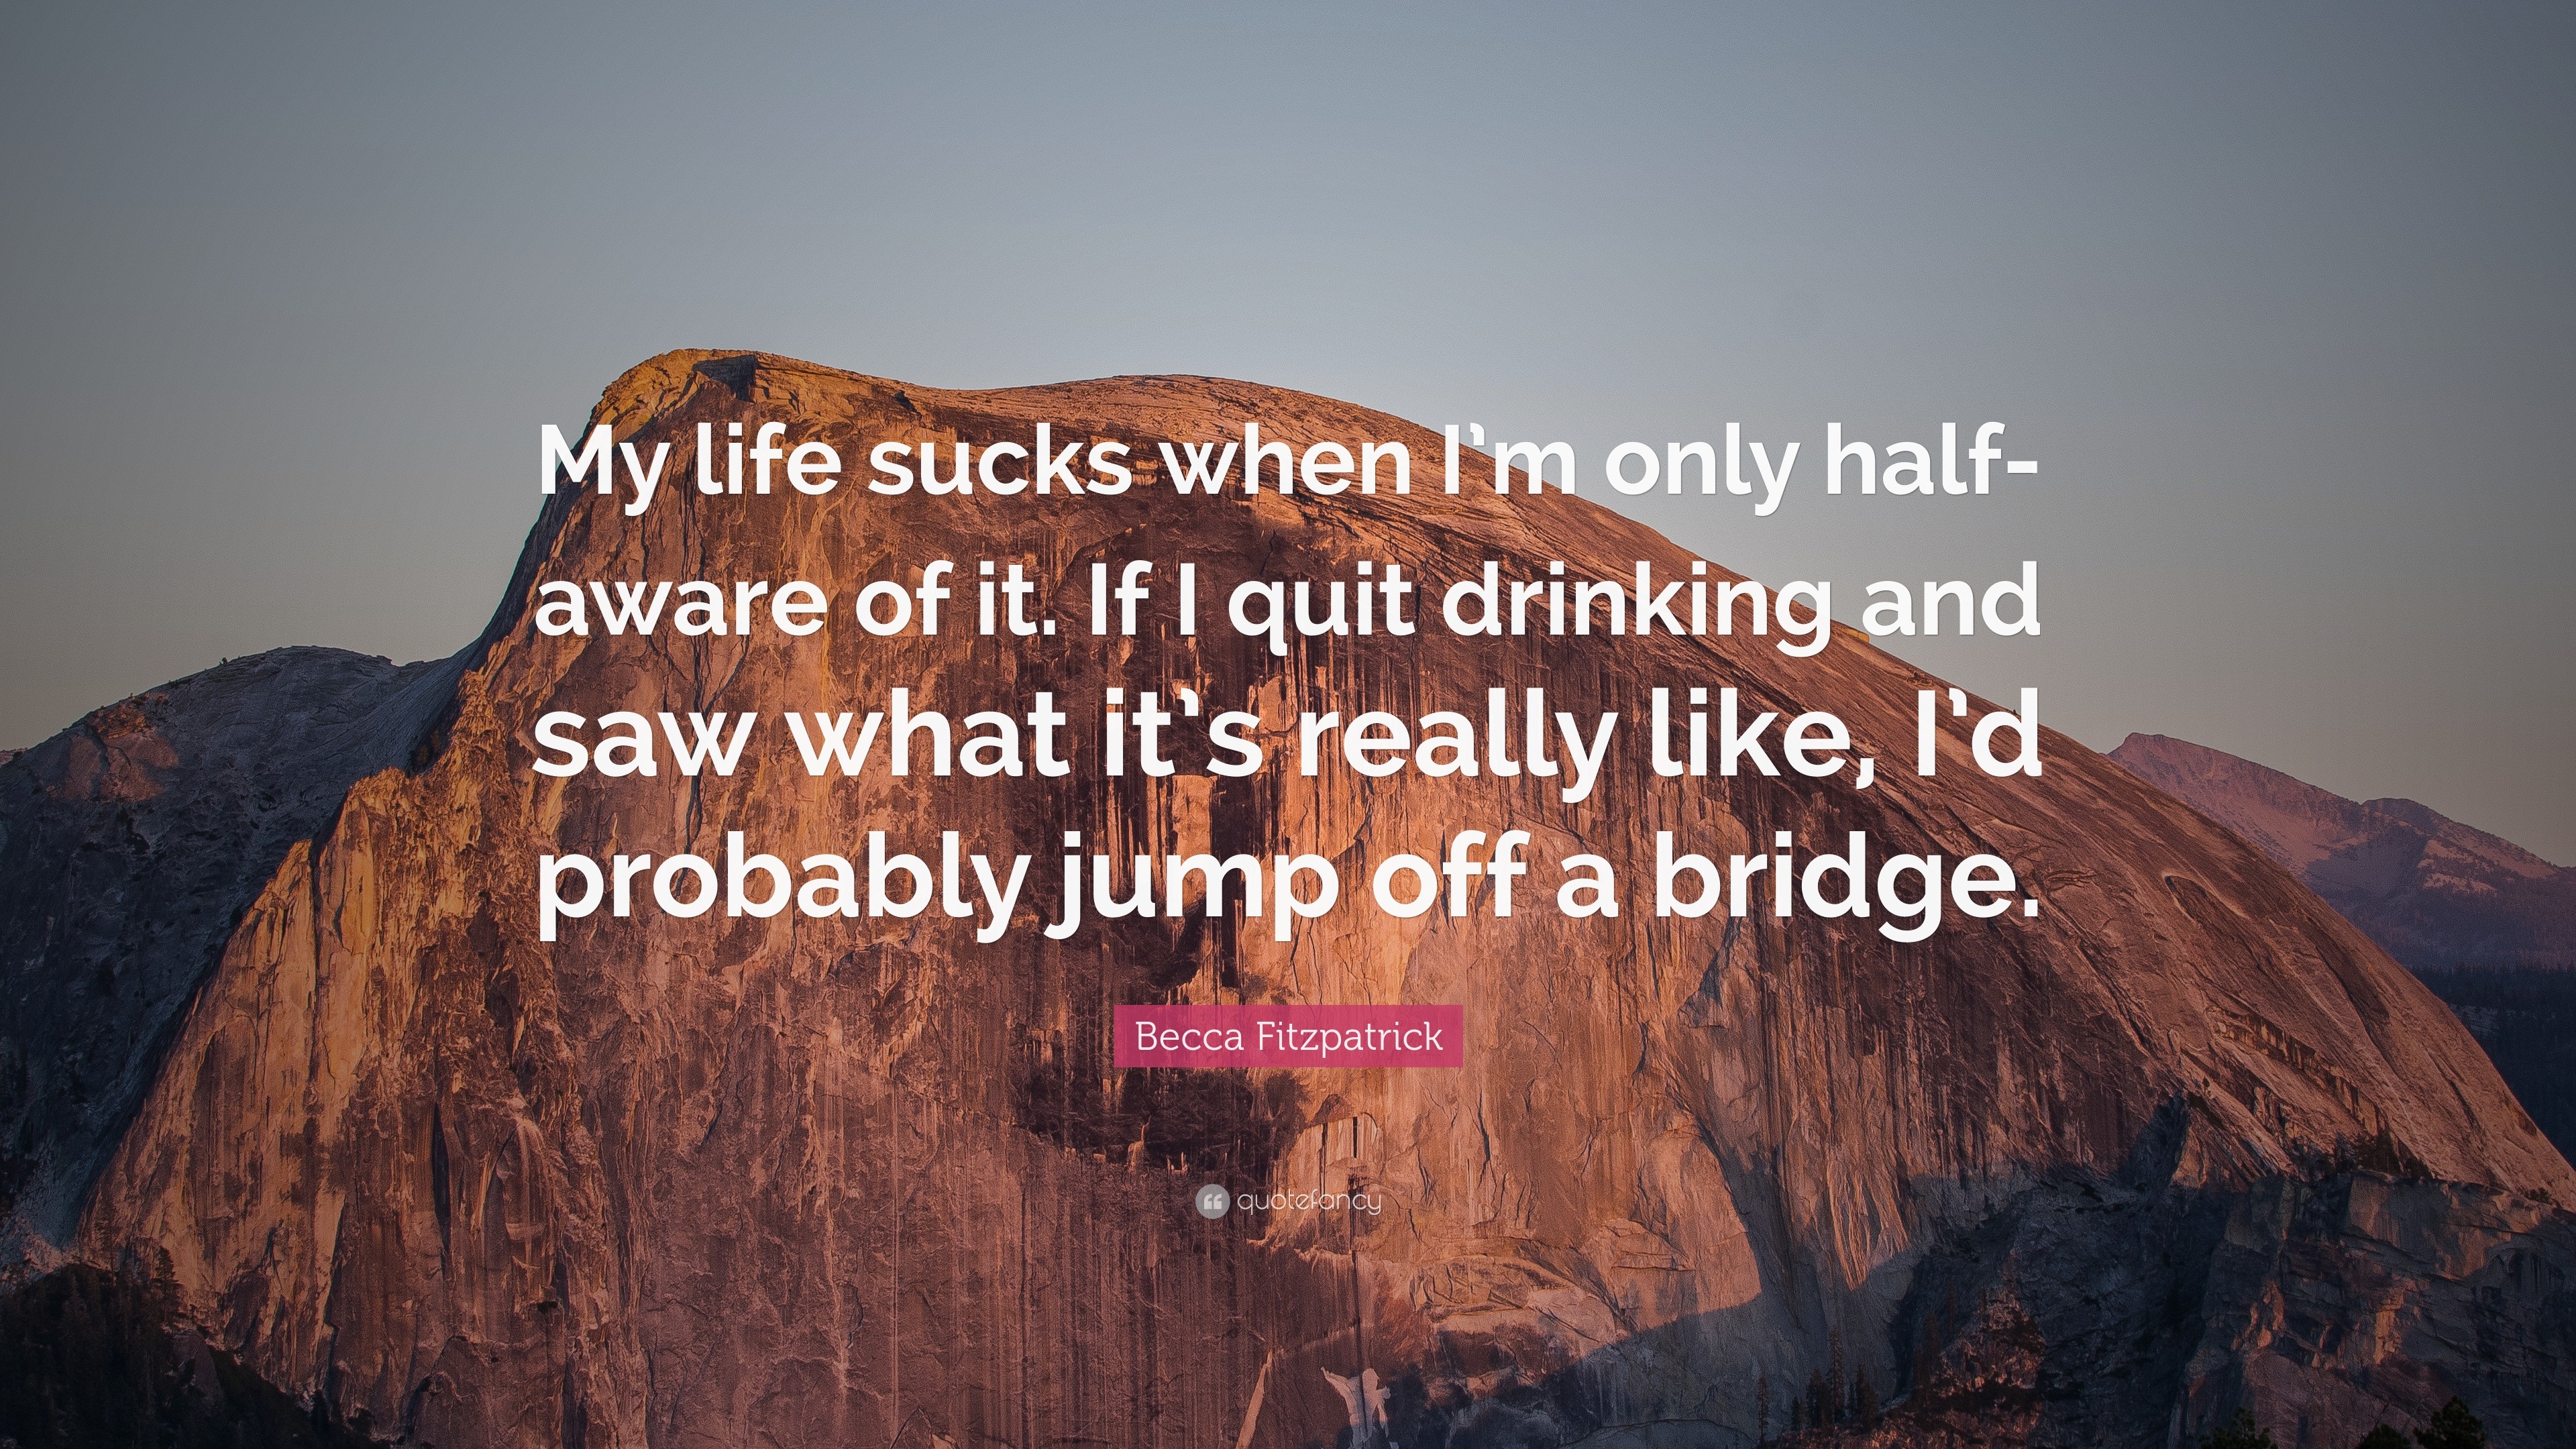 Becca Fitzpatrick Quote “My life sucks when I m only half aware